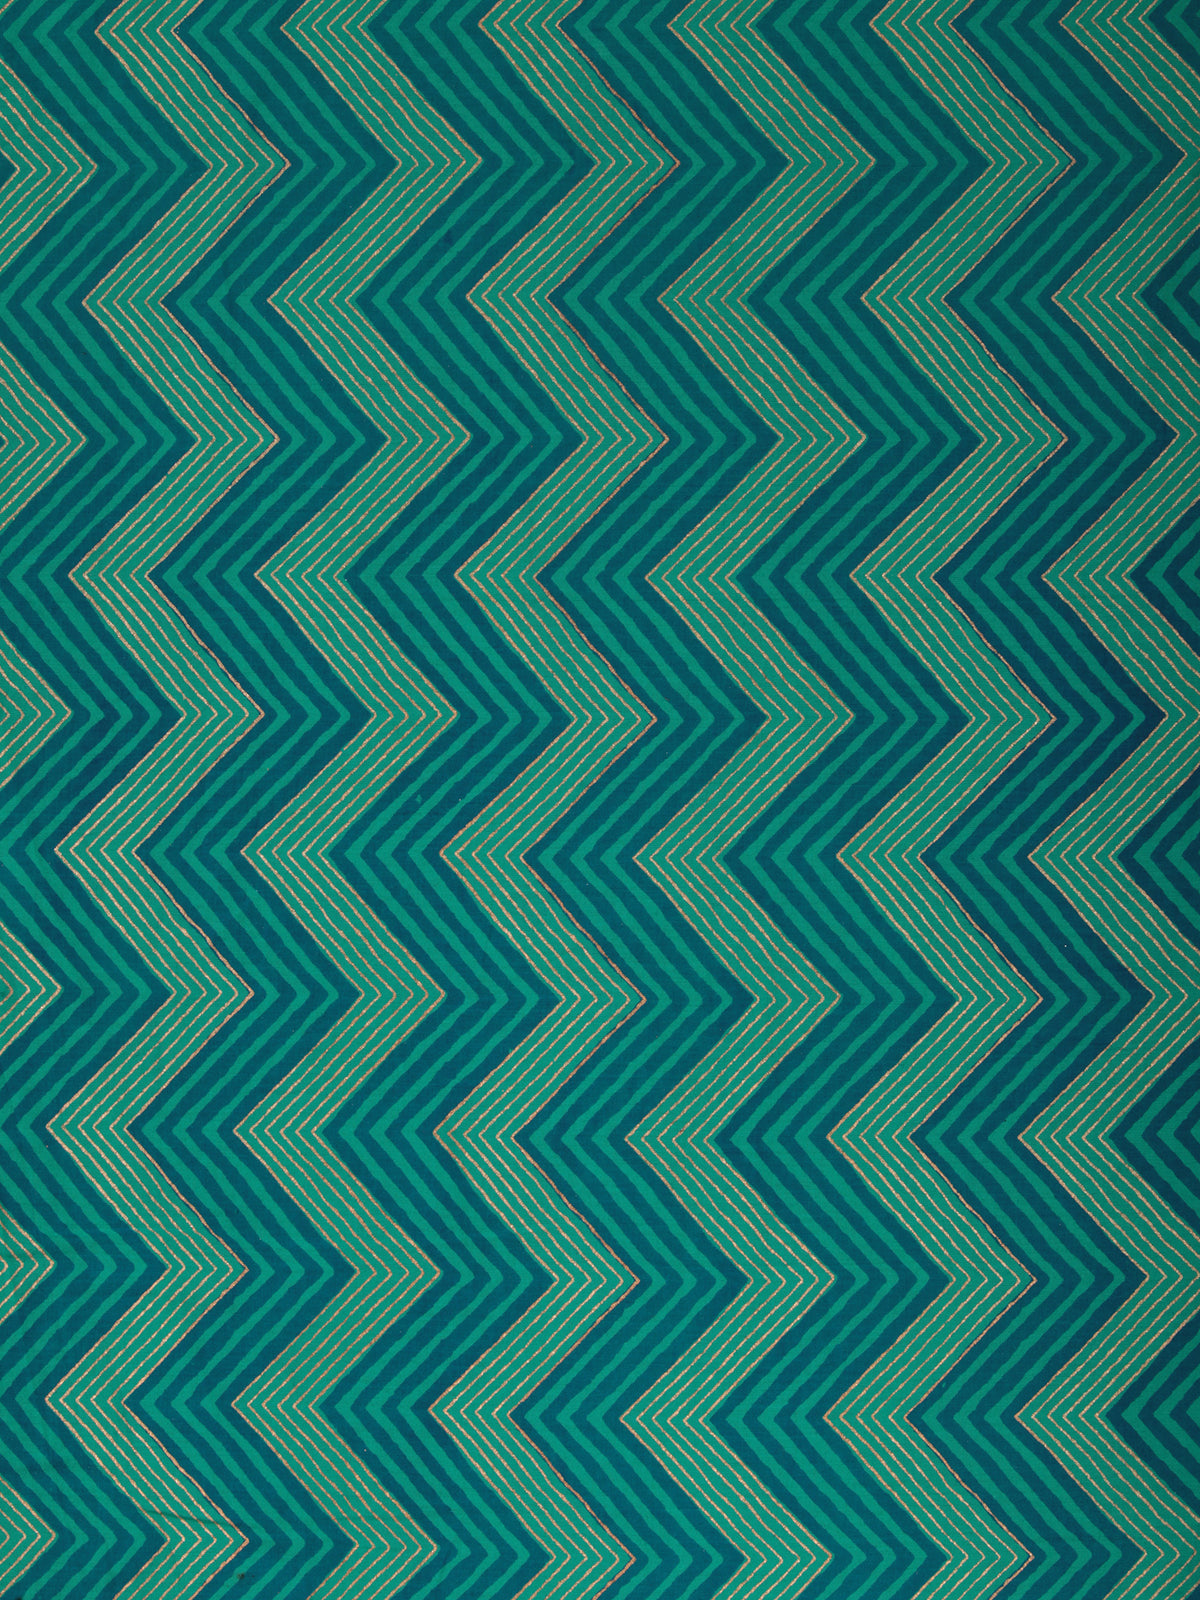 Green Blue Golden Block Printed Cotton Fabric Per Meter - F001F2383